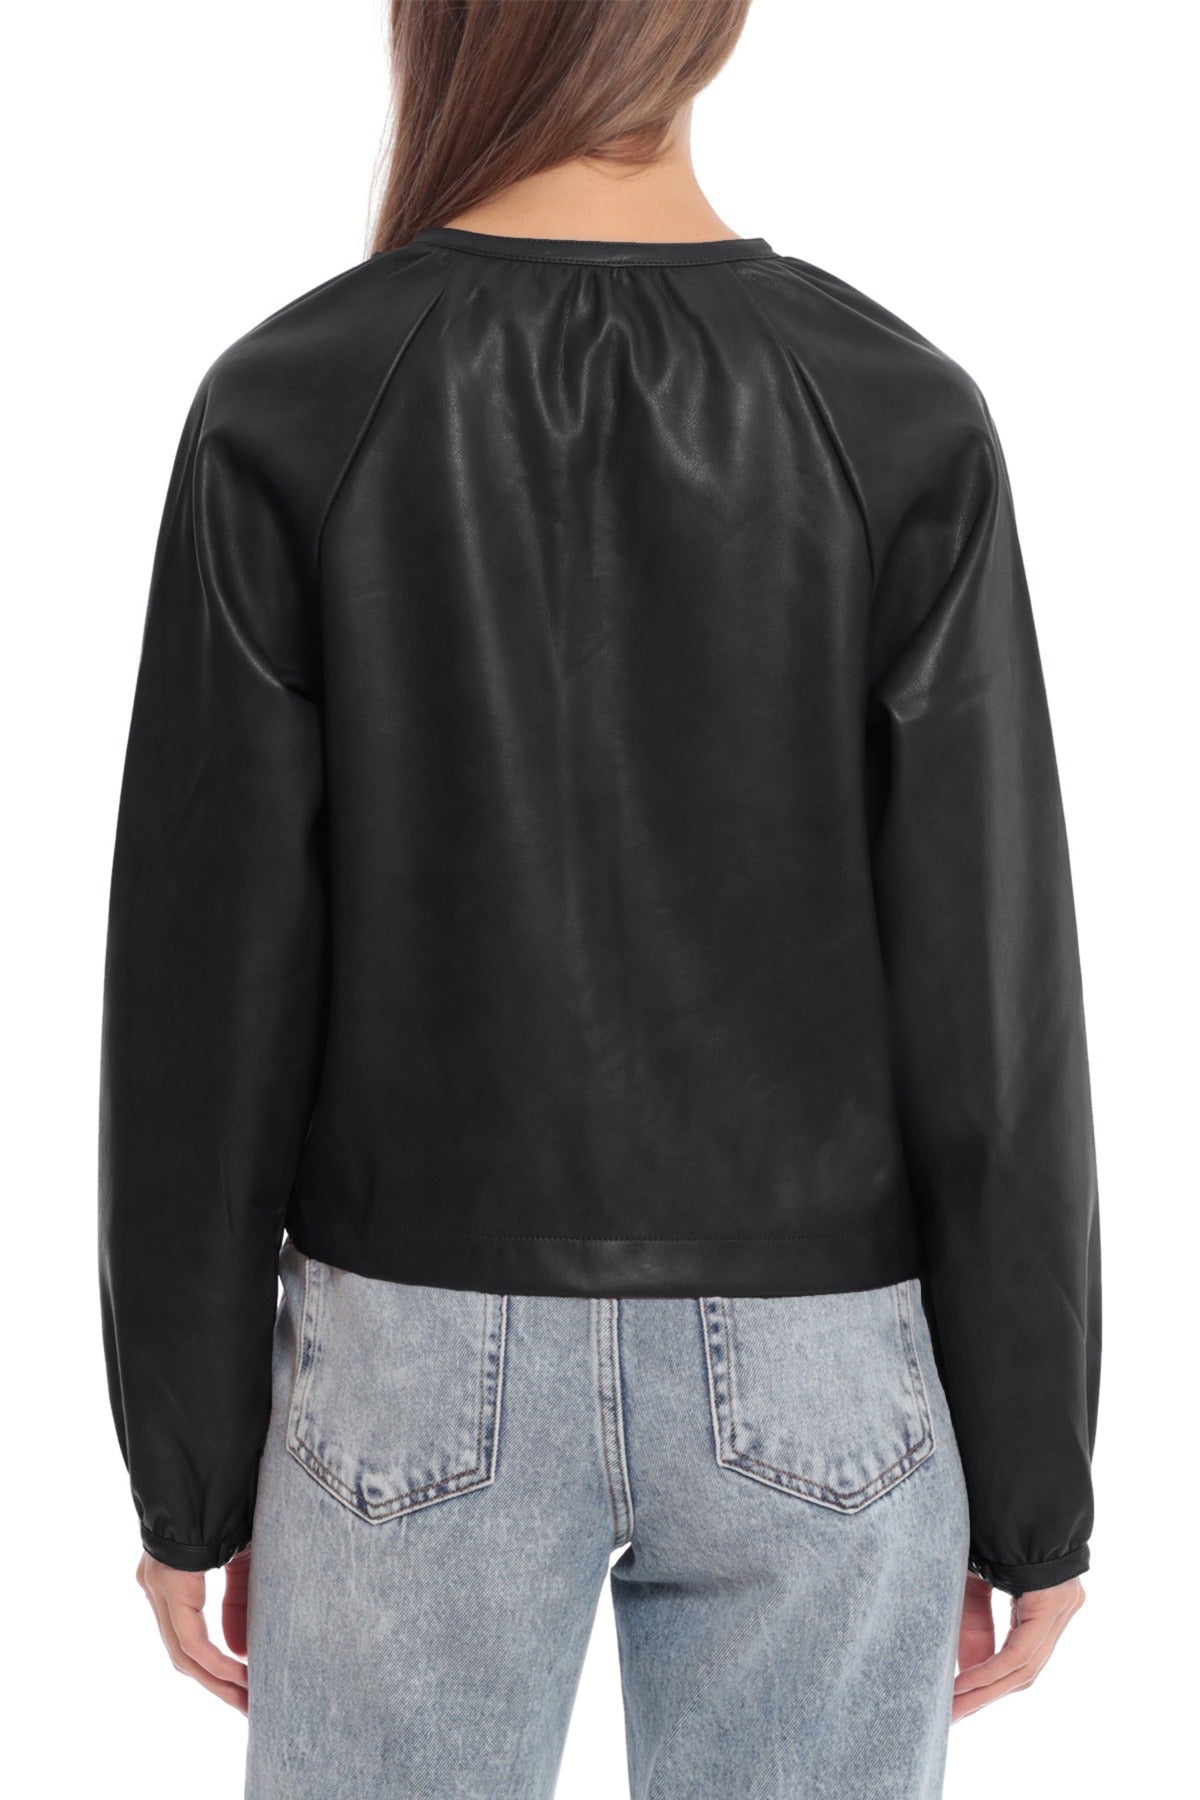 Women's Faux Leather Puff Sleeve Raglan Top Shirt Jacket black